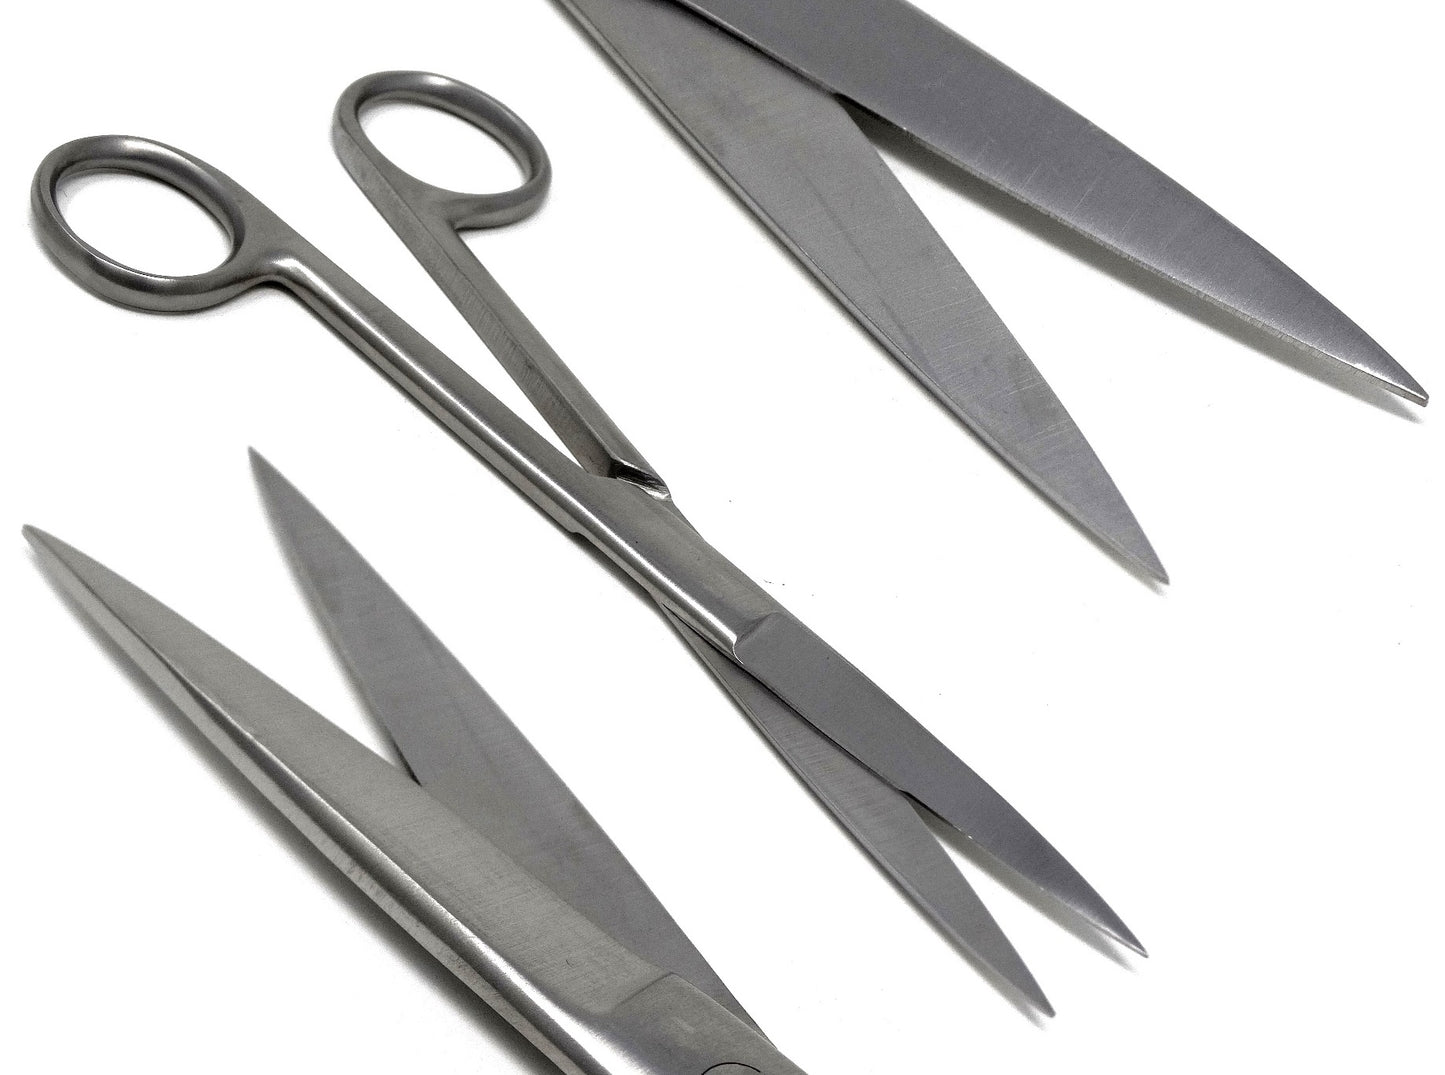 Dissecting Scissors, Sharp / Sharp Point Blades, 4.5" (11.43cm), Straight, Premium Quality, Stainless Steel